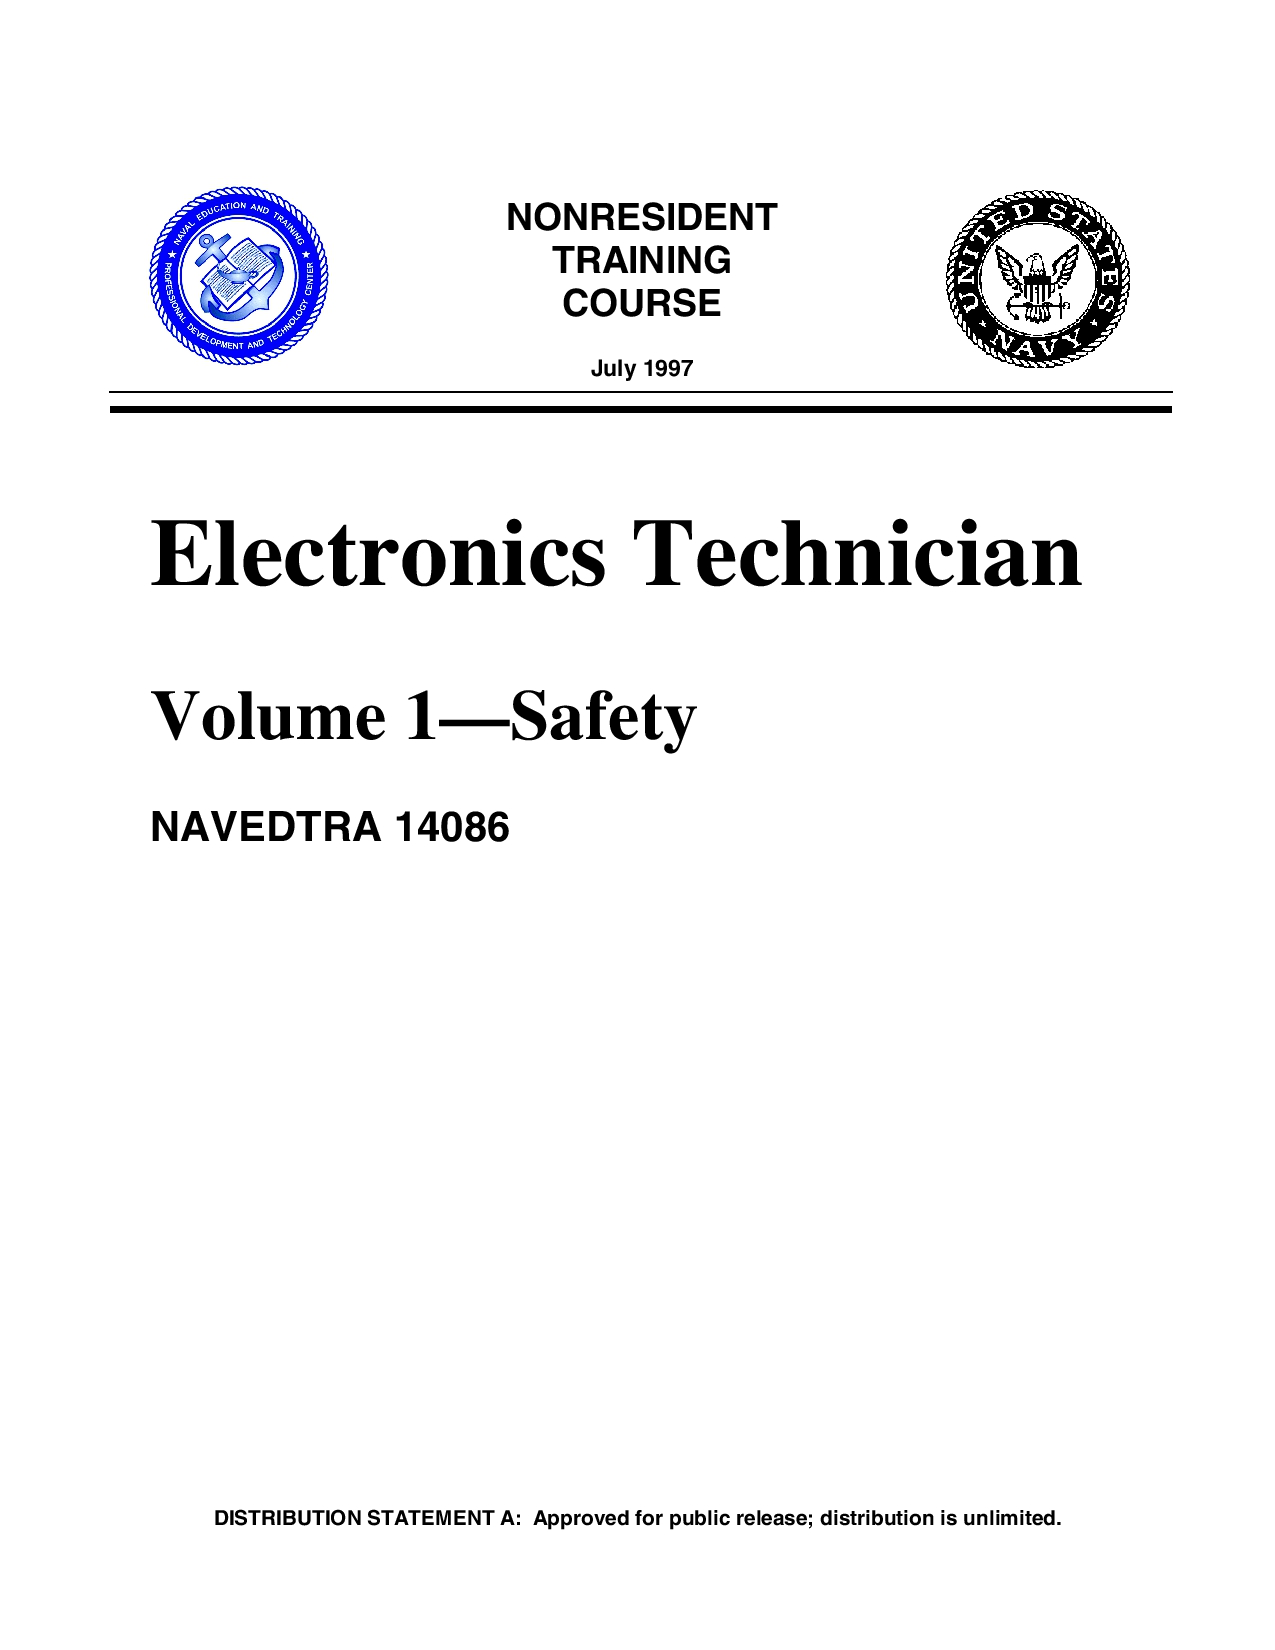 electronics-technician-volume-1-safety-pdf-download-service-manual-repair-manual-pdf-download